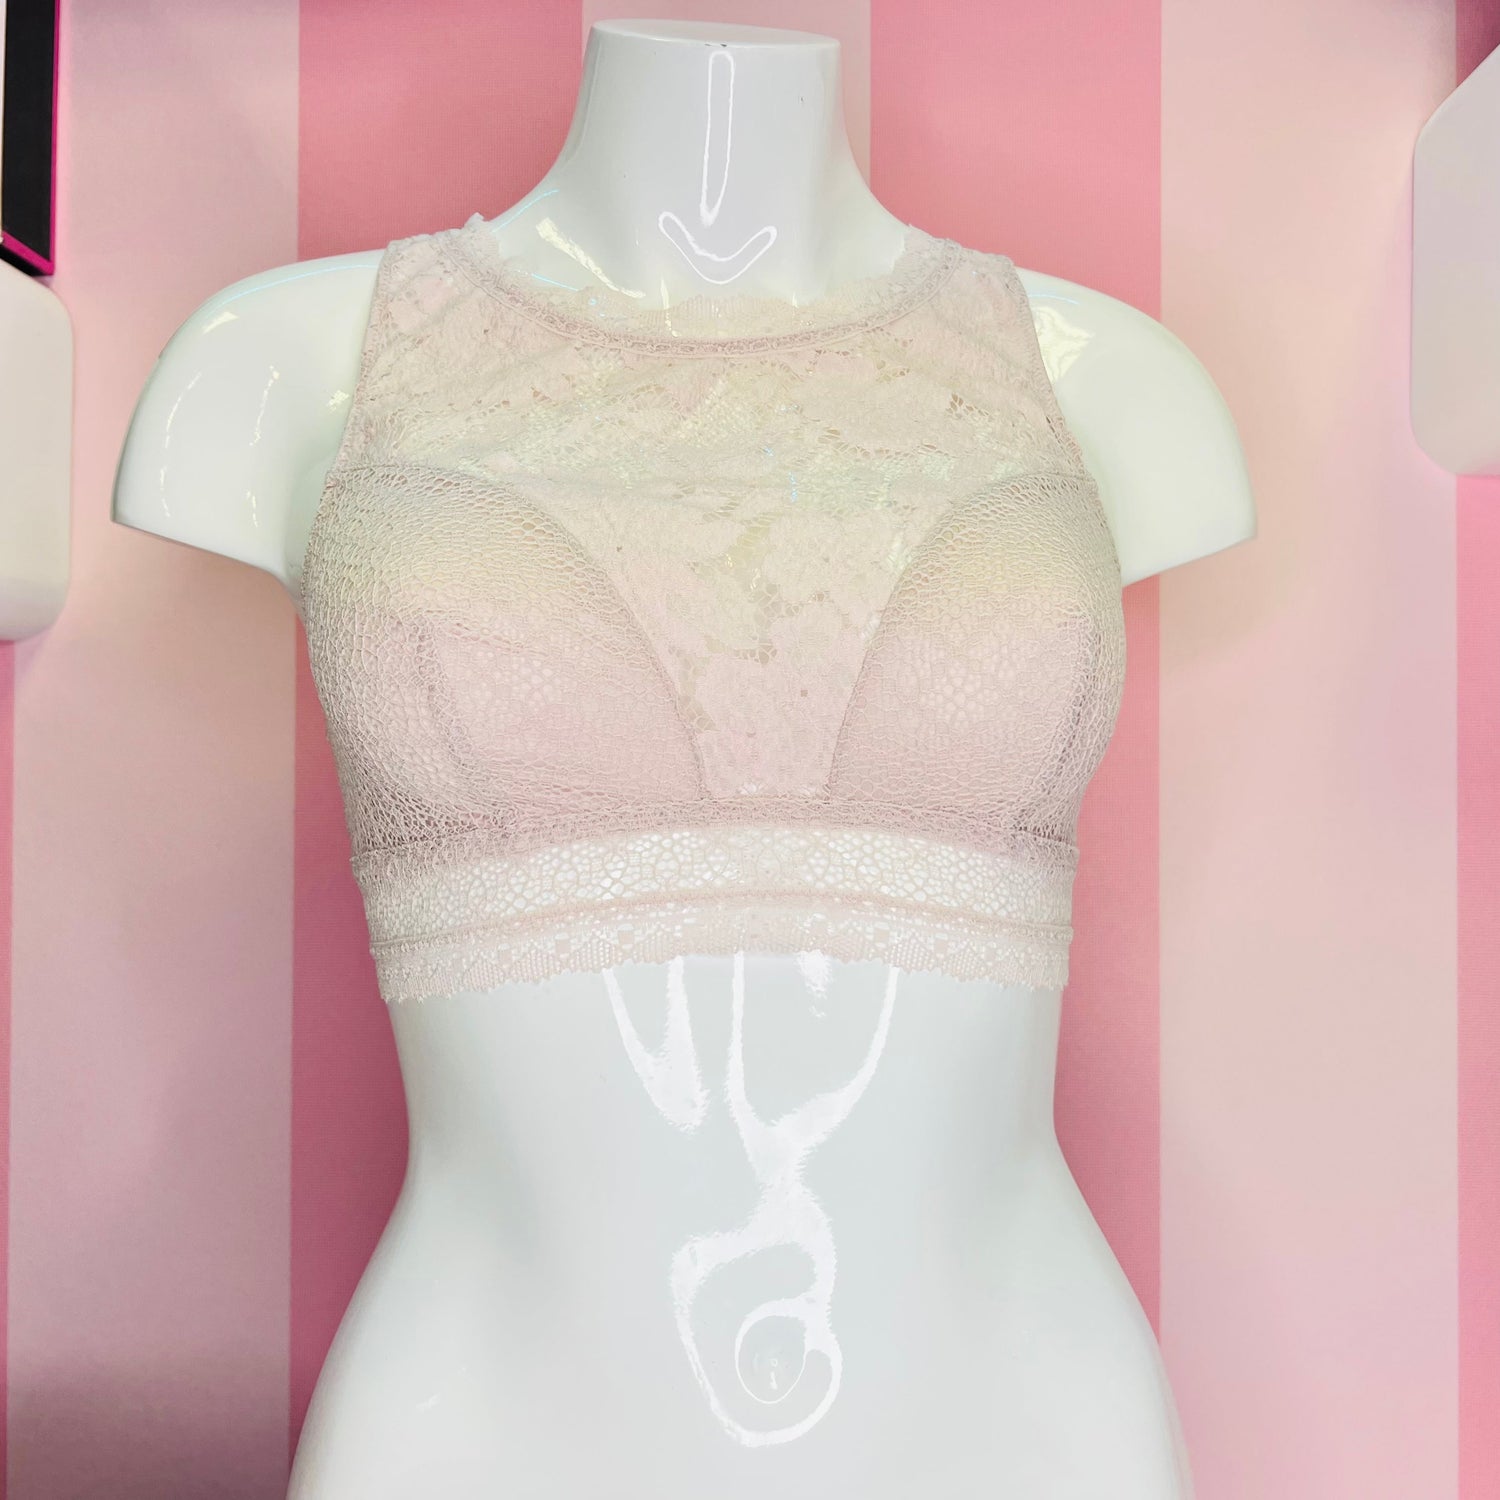 Krajková braletka - XS / Růžová / Nové se štítky - Braletka Victoria’s Secret